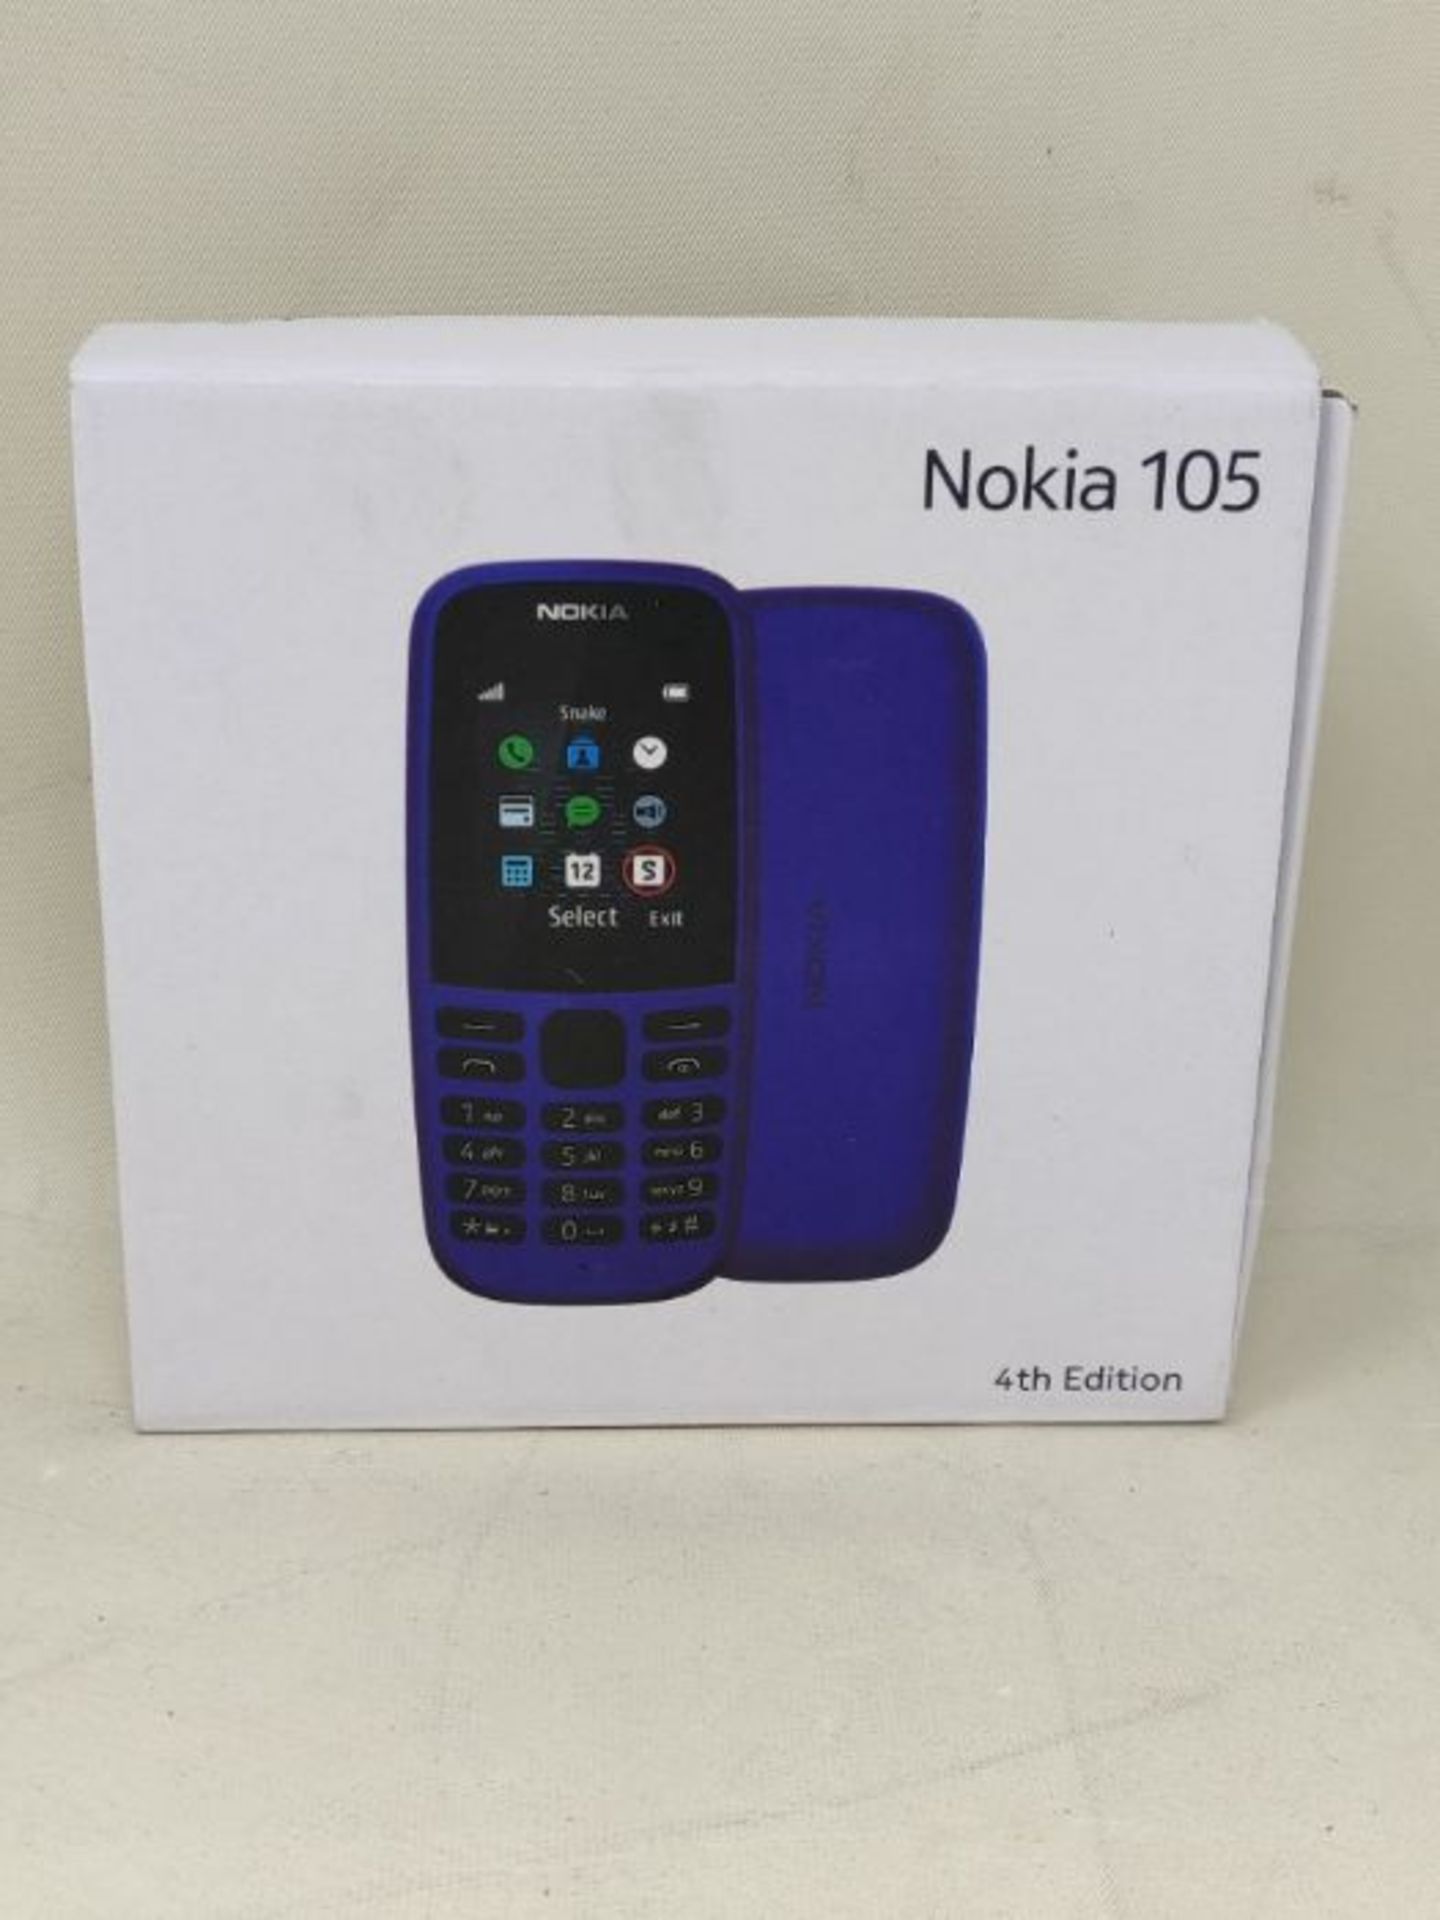 Nokia 105 (2019 edition) 1.77 Inch UK SIM Free Feature Phone (Single SIM)  Pink - Image 2 of 3